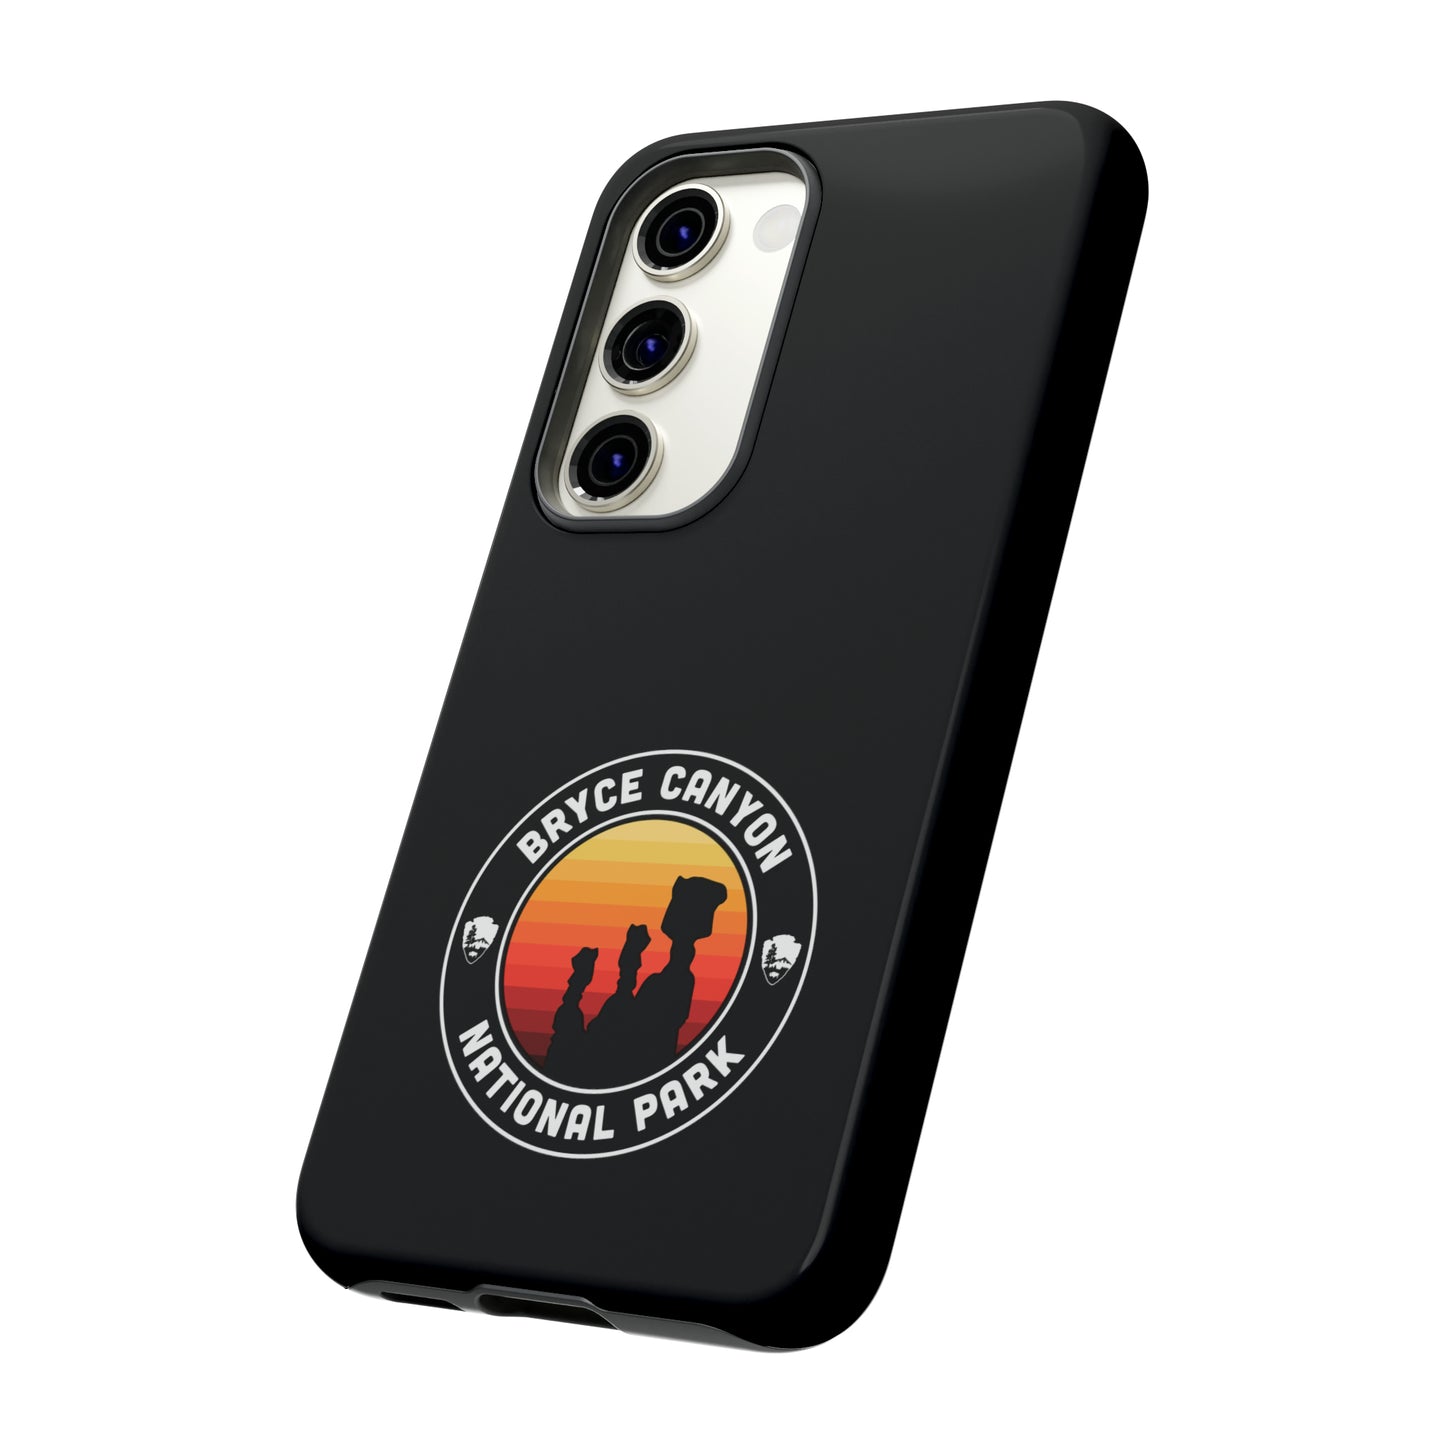 Bryce Canyon National Park Phone Case - Round Emblem Design